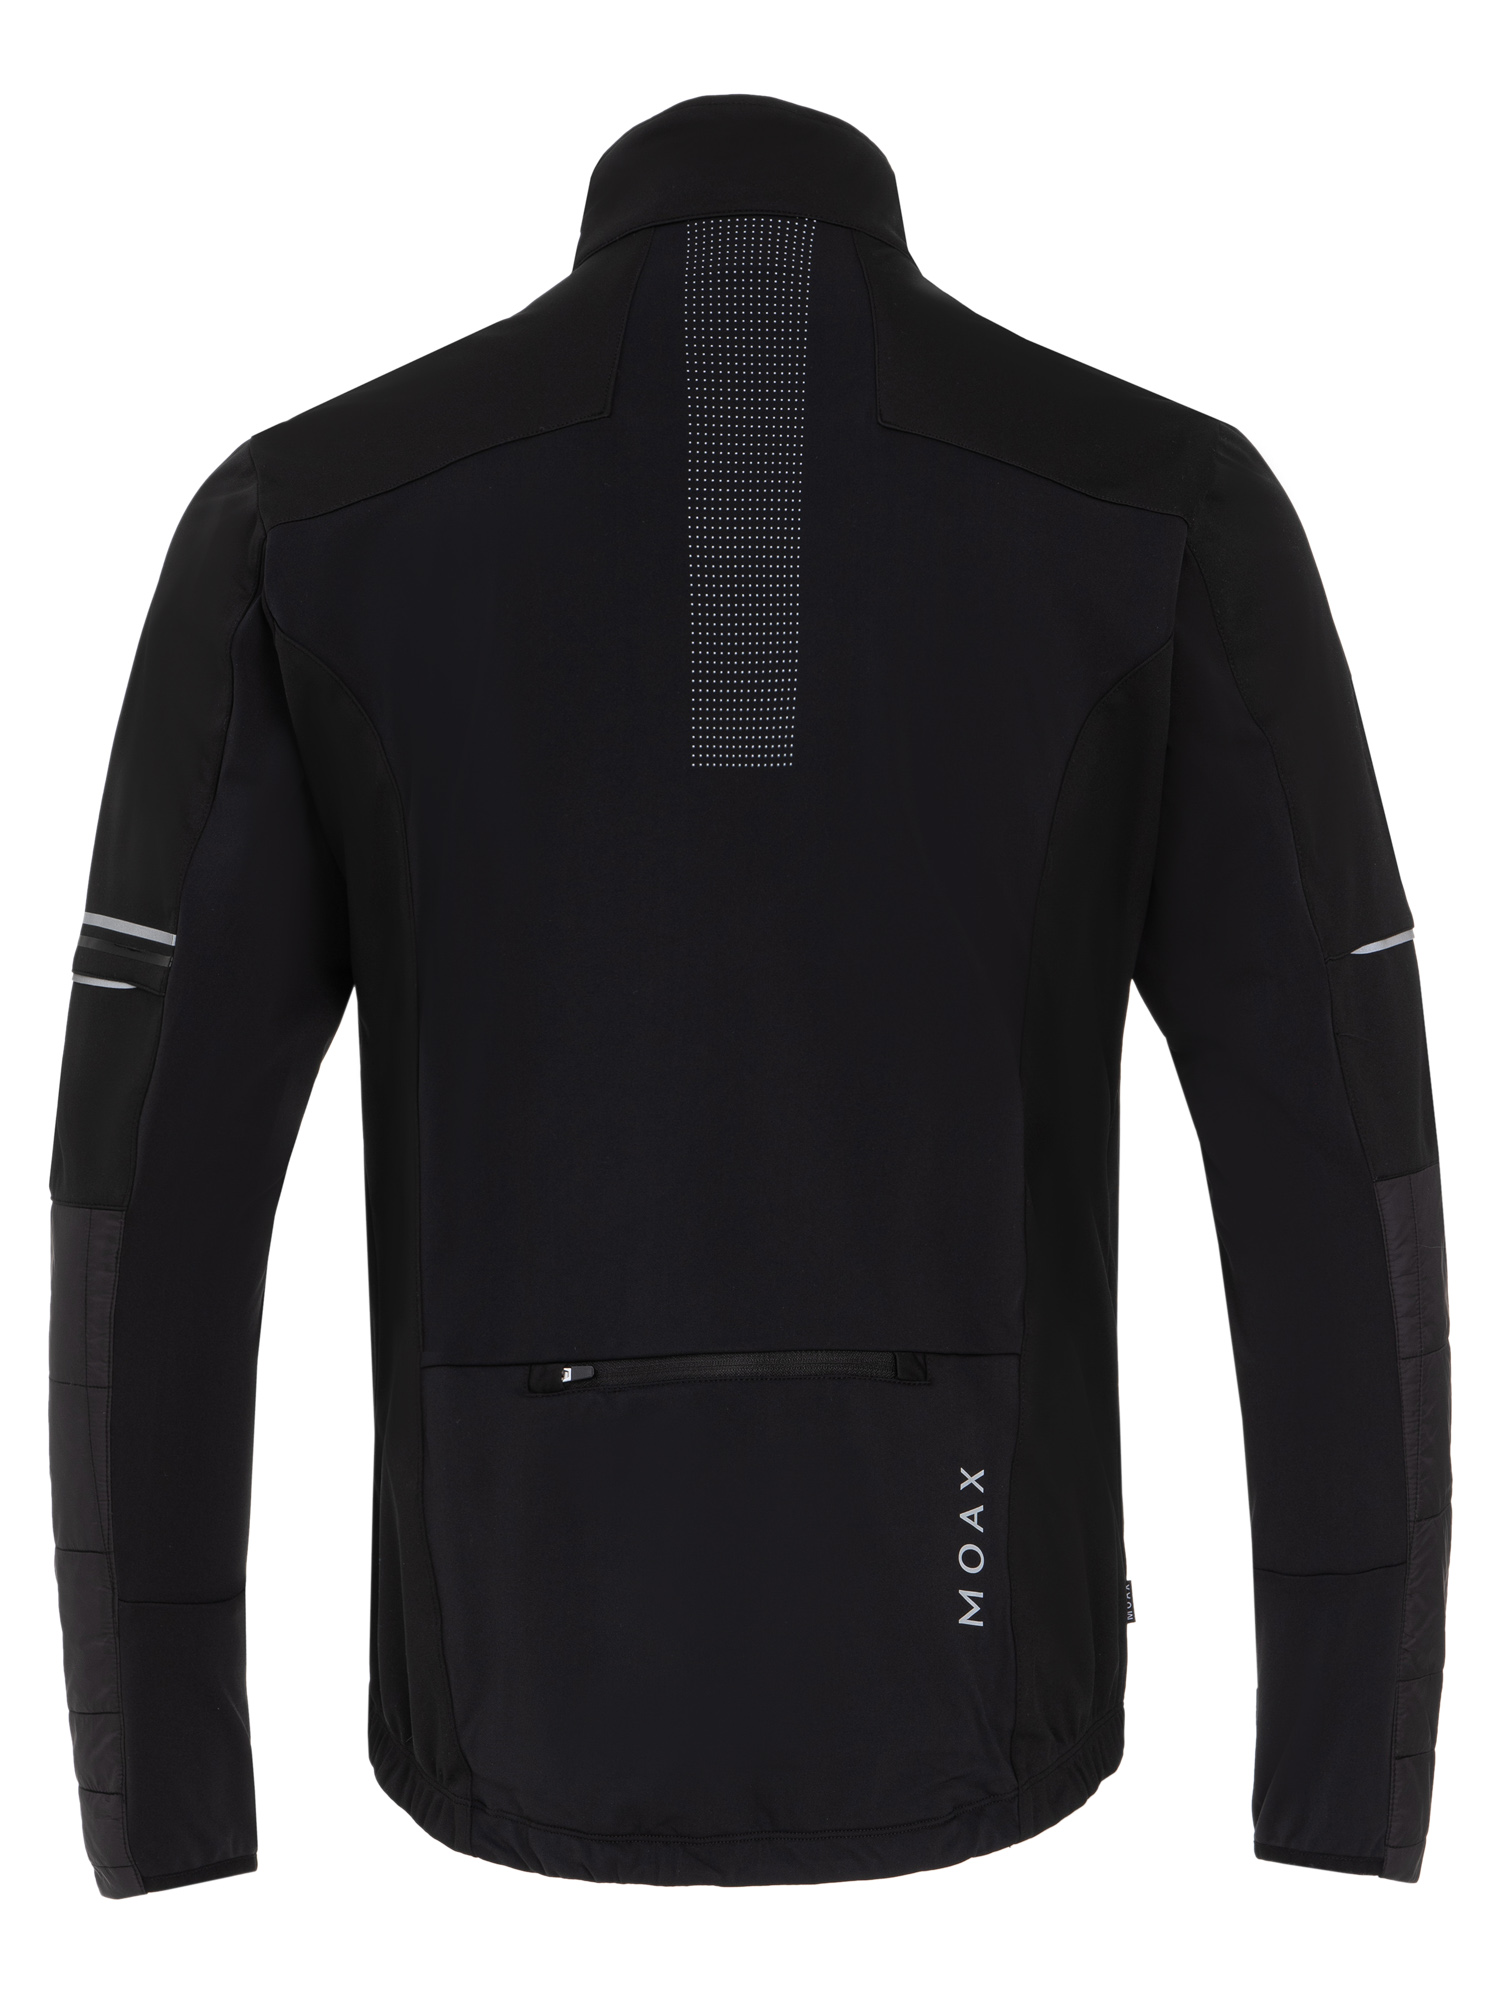 Куртка беговая MOAX Navado Hybrid Лайм